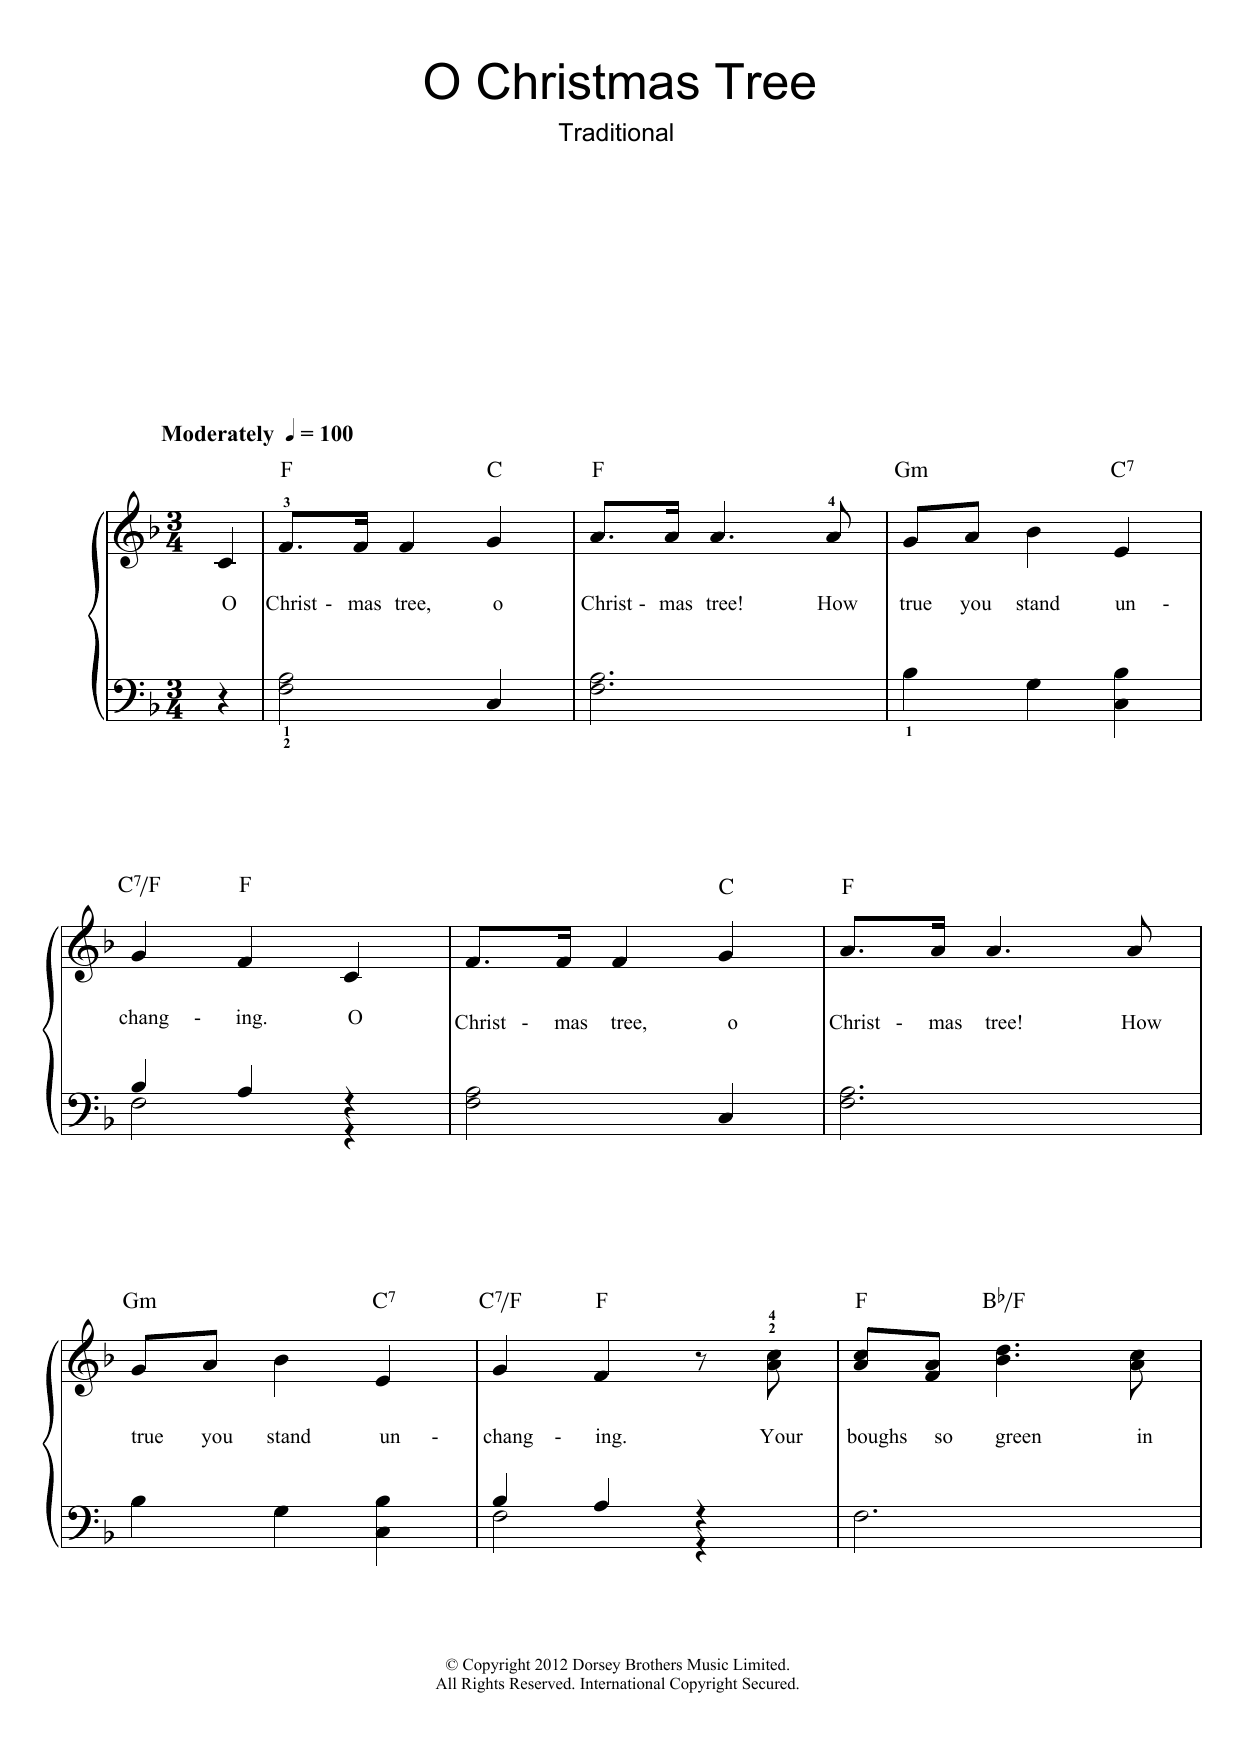 Traditional Carol O Christmas Tree Sheet Music Notes & Chords for Lyrics & Piano Chords - Download or Print PDF